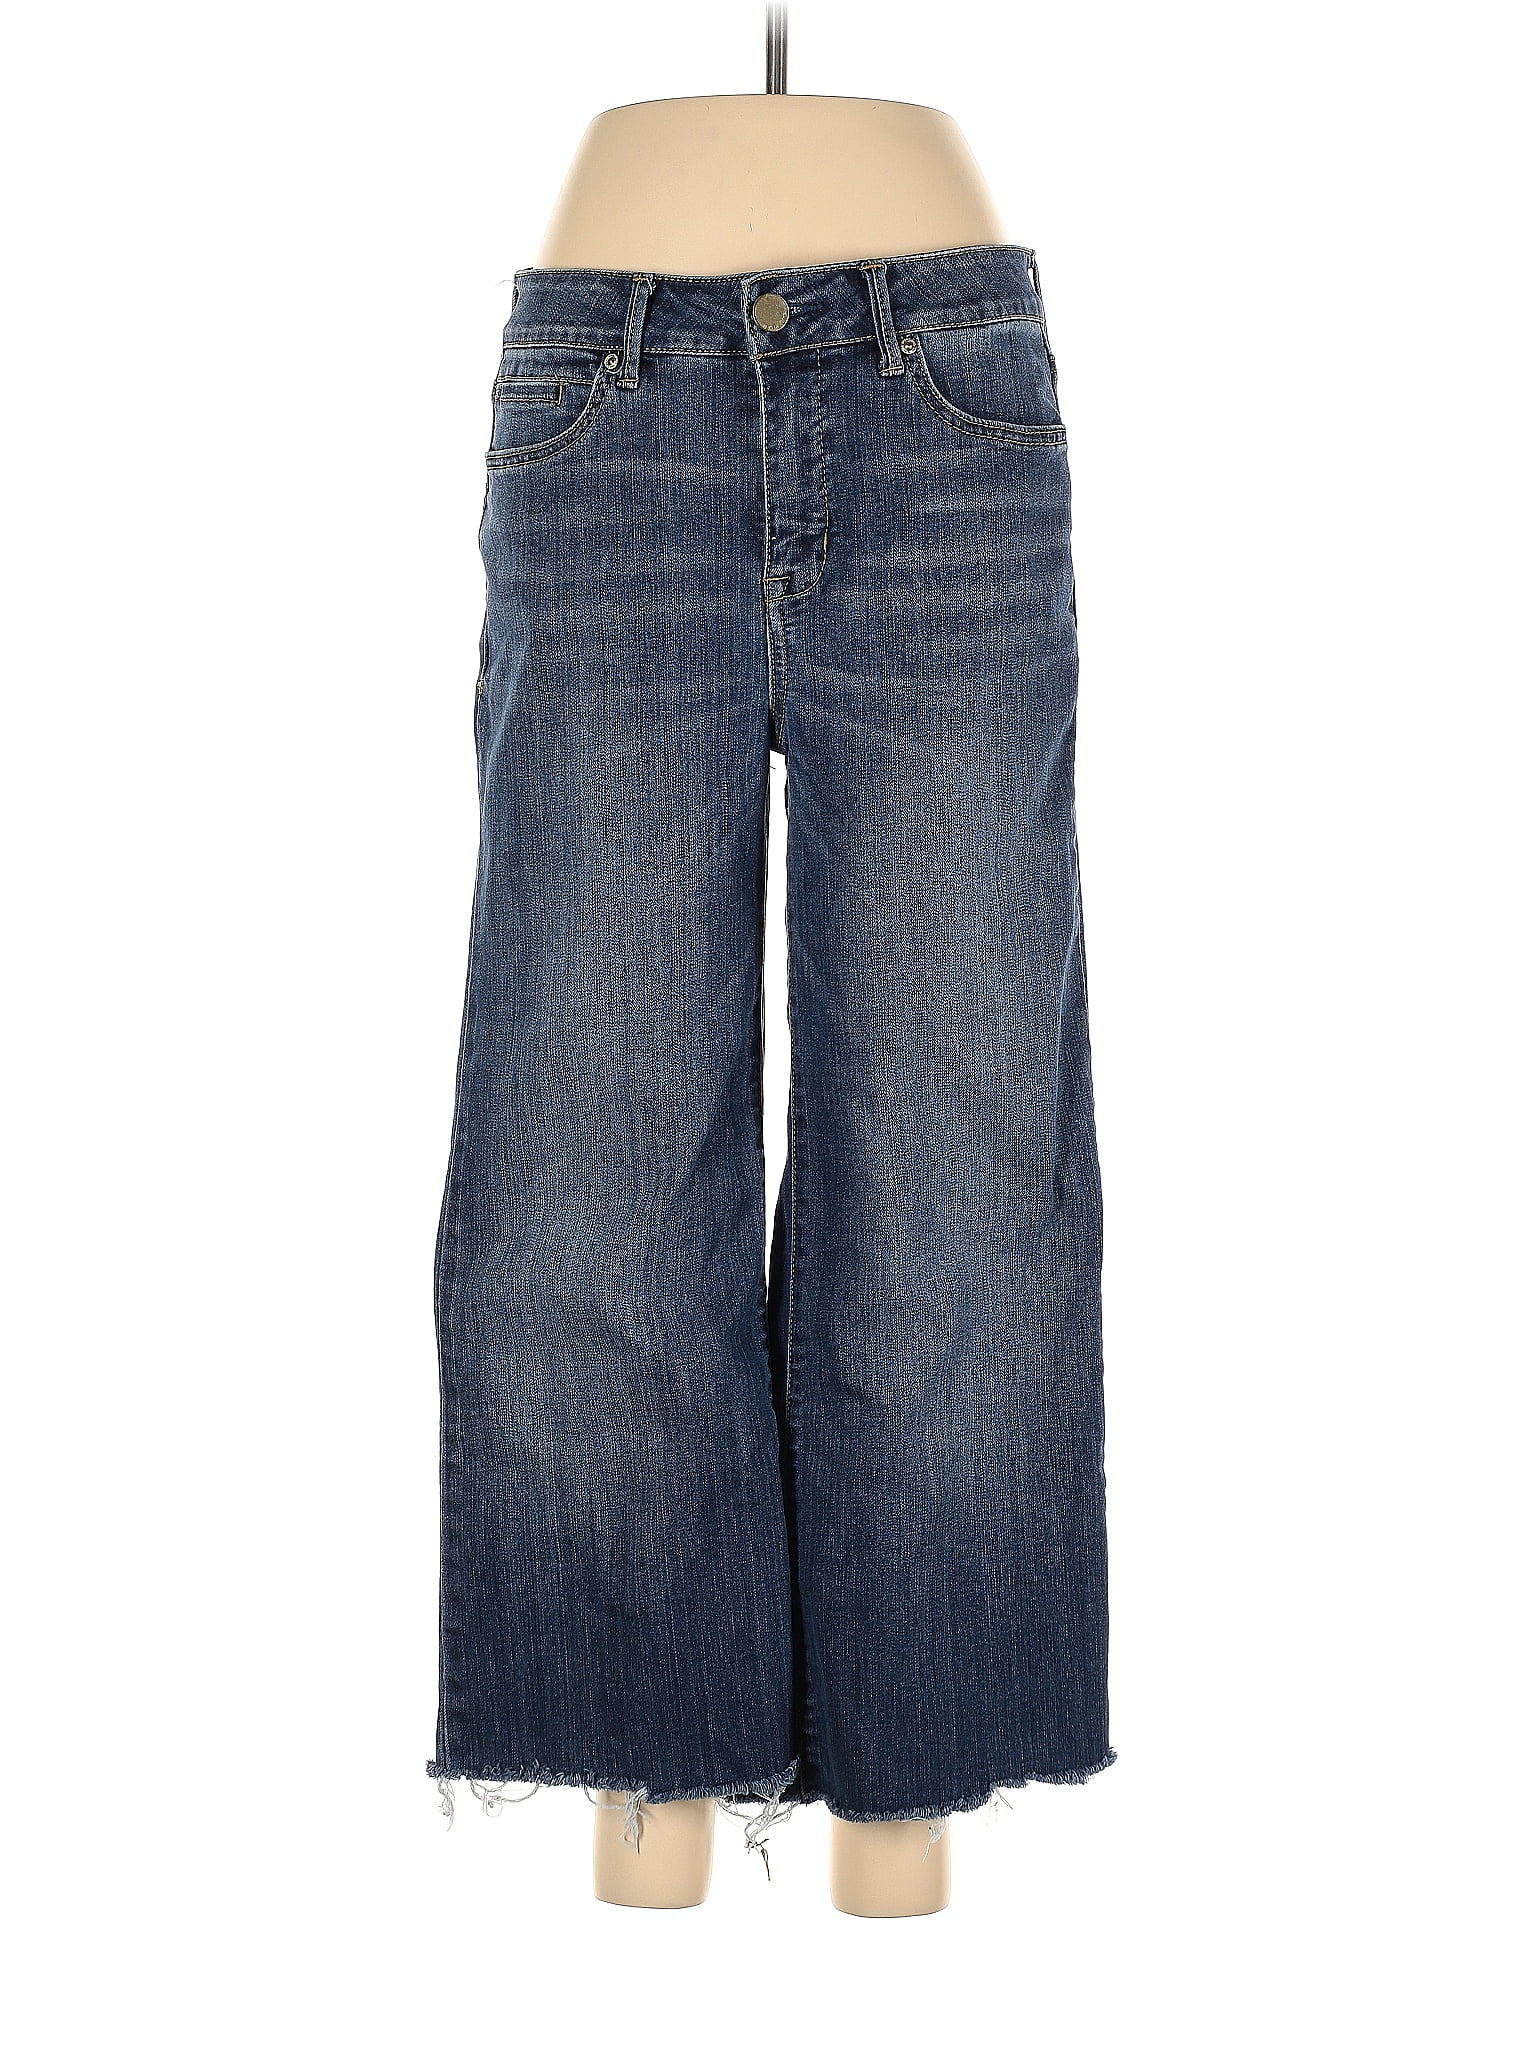 Seven7 Jeans Denim Dark Blue wash Size 28  Sweaters and leggings, Seven7  jeans, Seven7